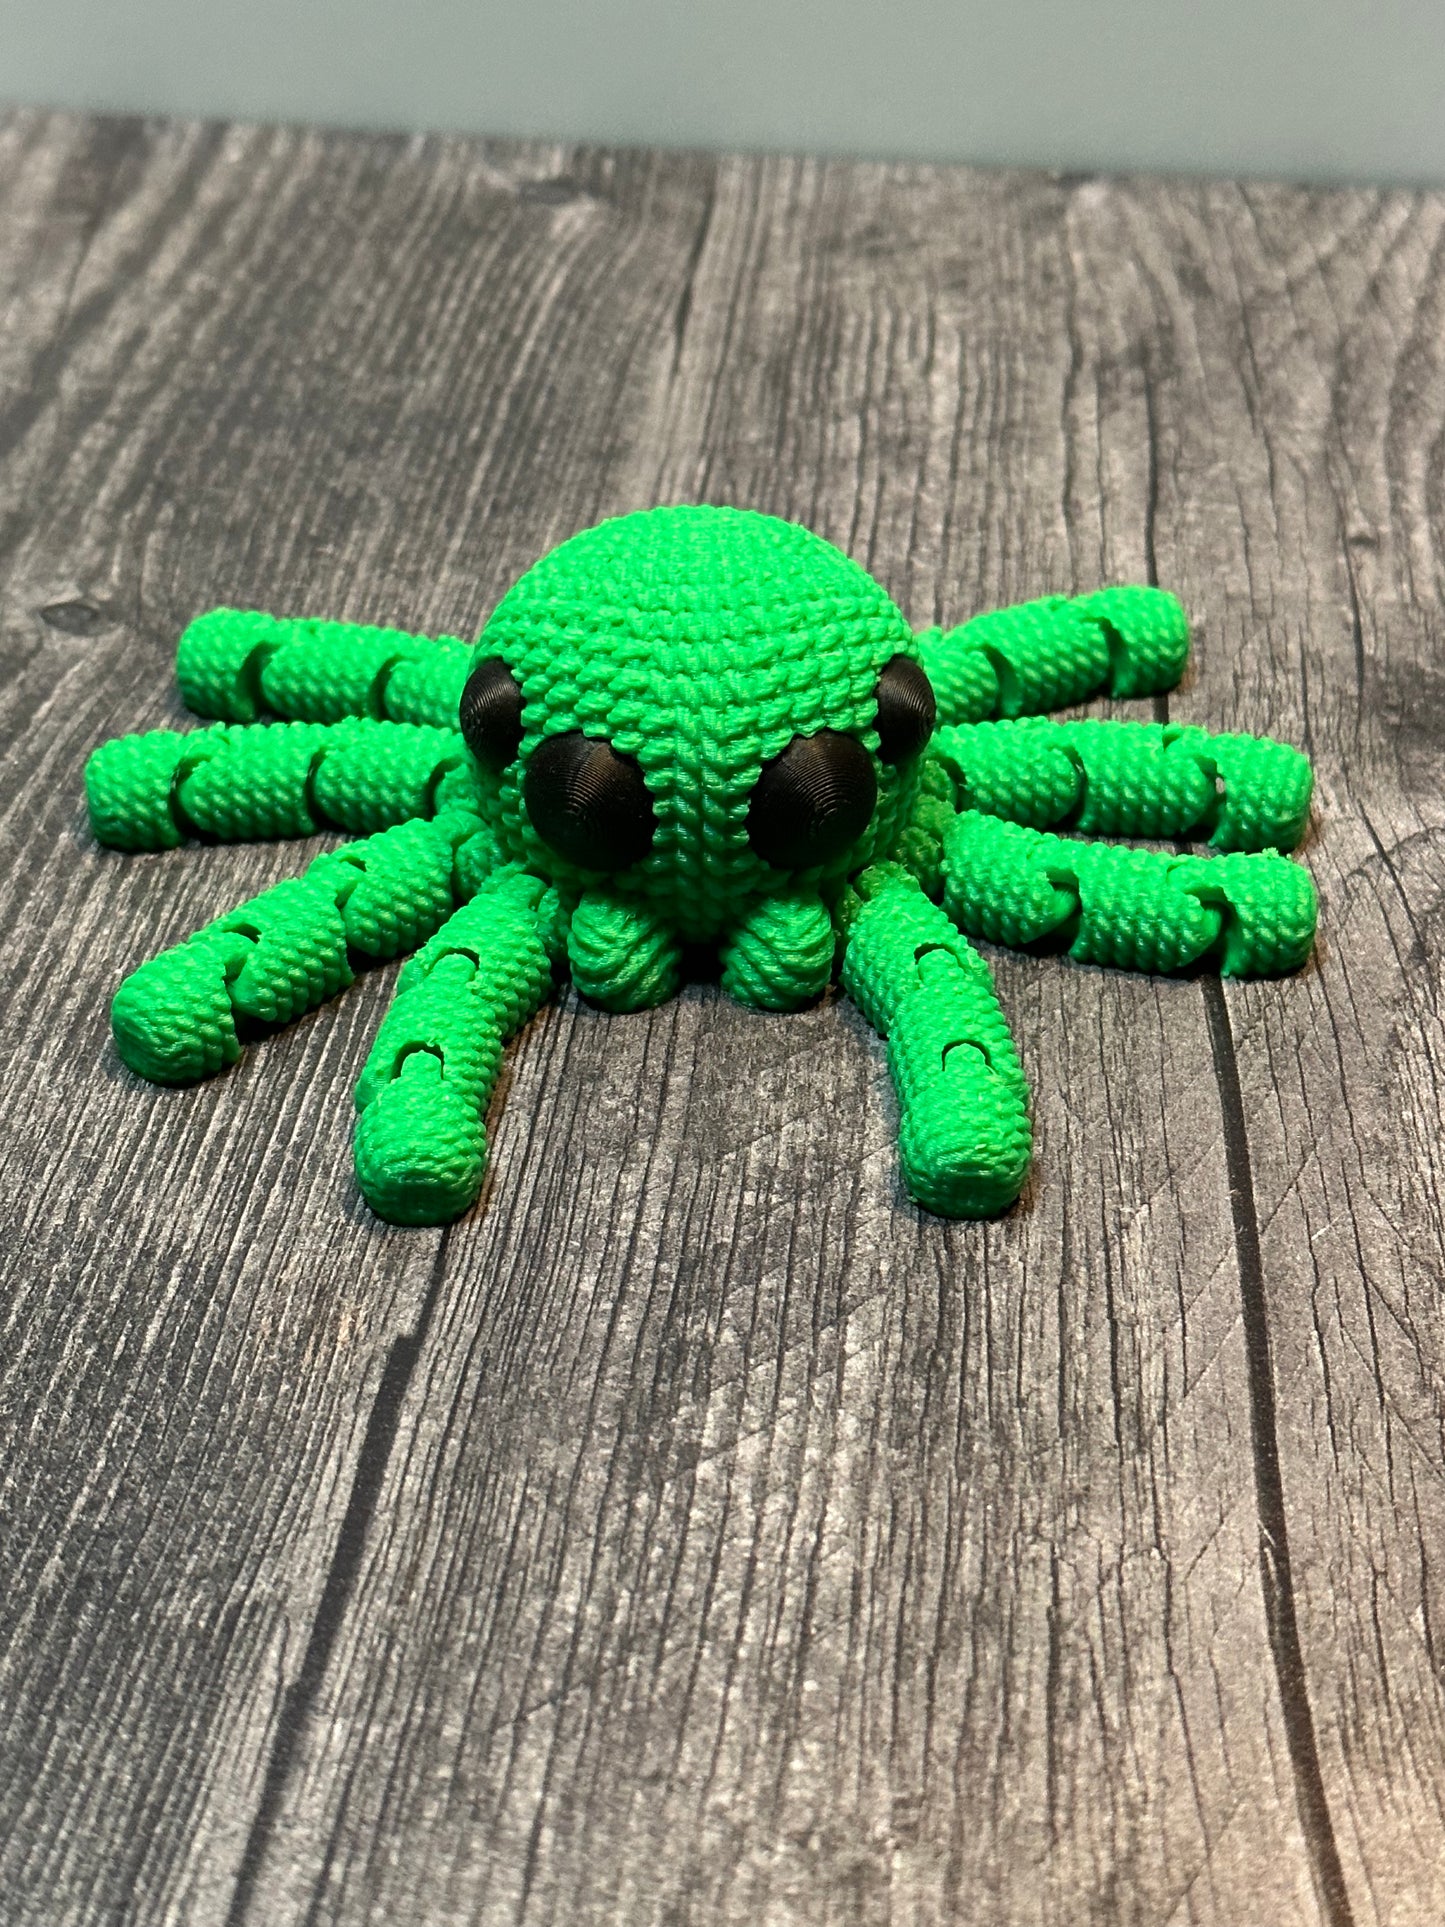 Crochet Spider - Green/Black